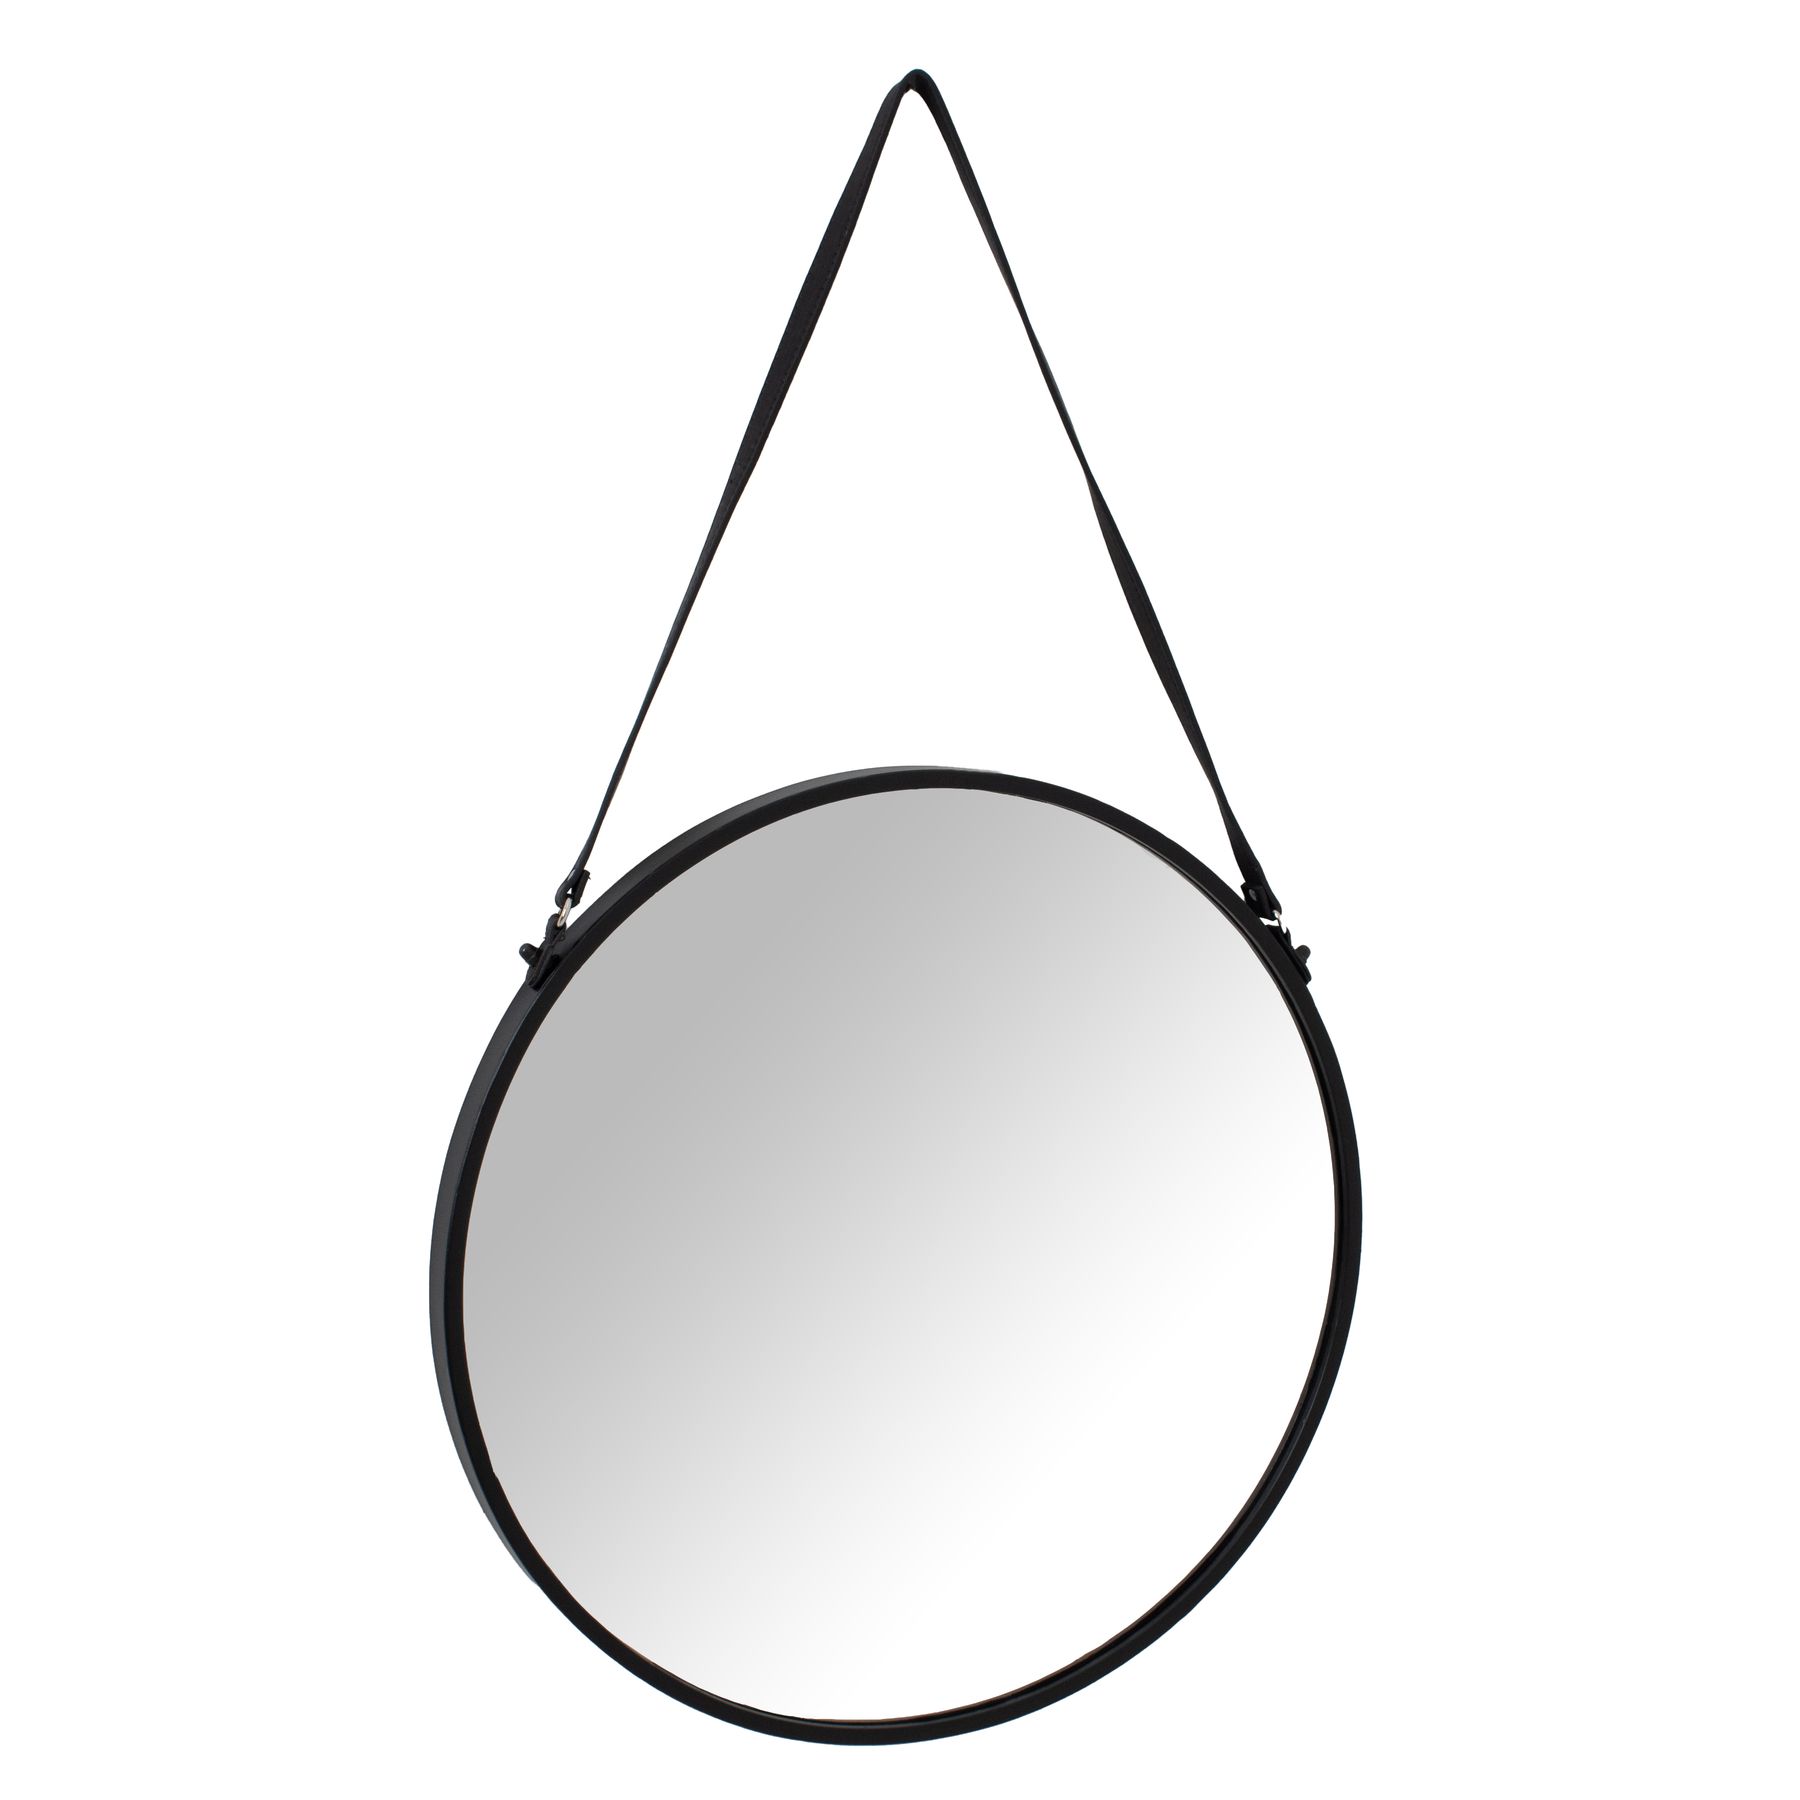 Matt Black Rimmed Round Hanging Wall Mirror With Black Strap - Image 1